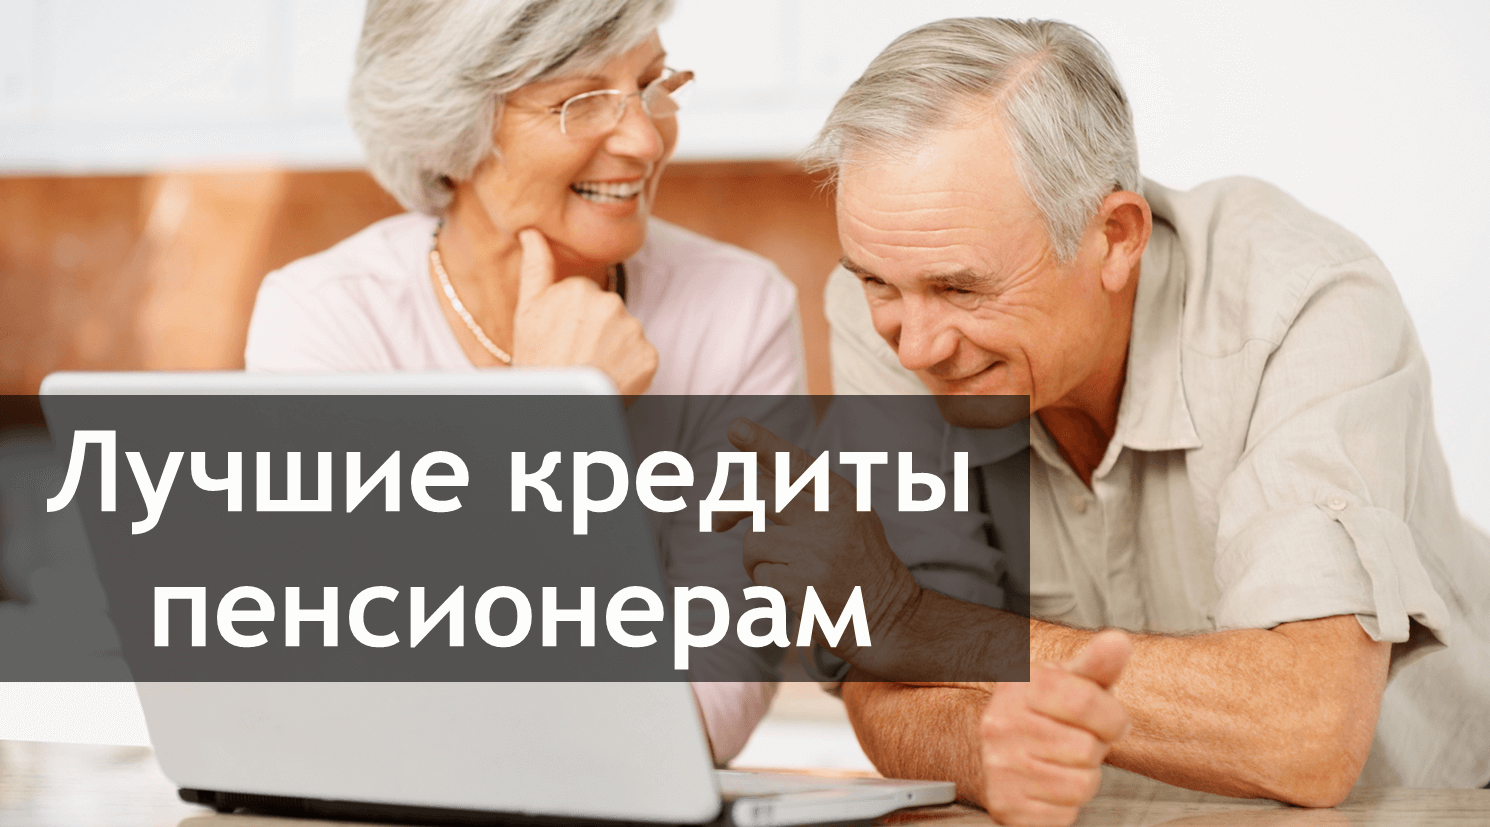 Кредит пенсионерам до 75 лет